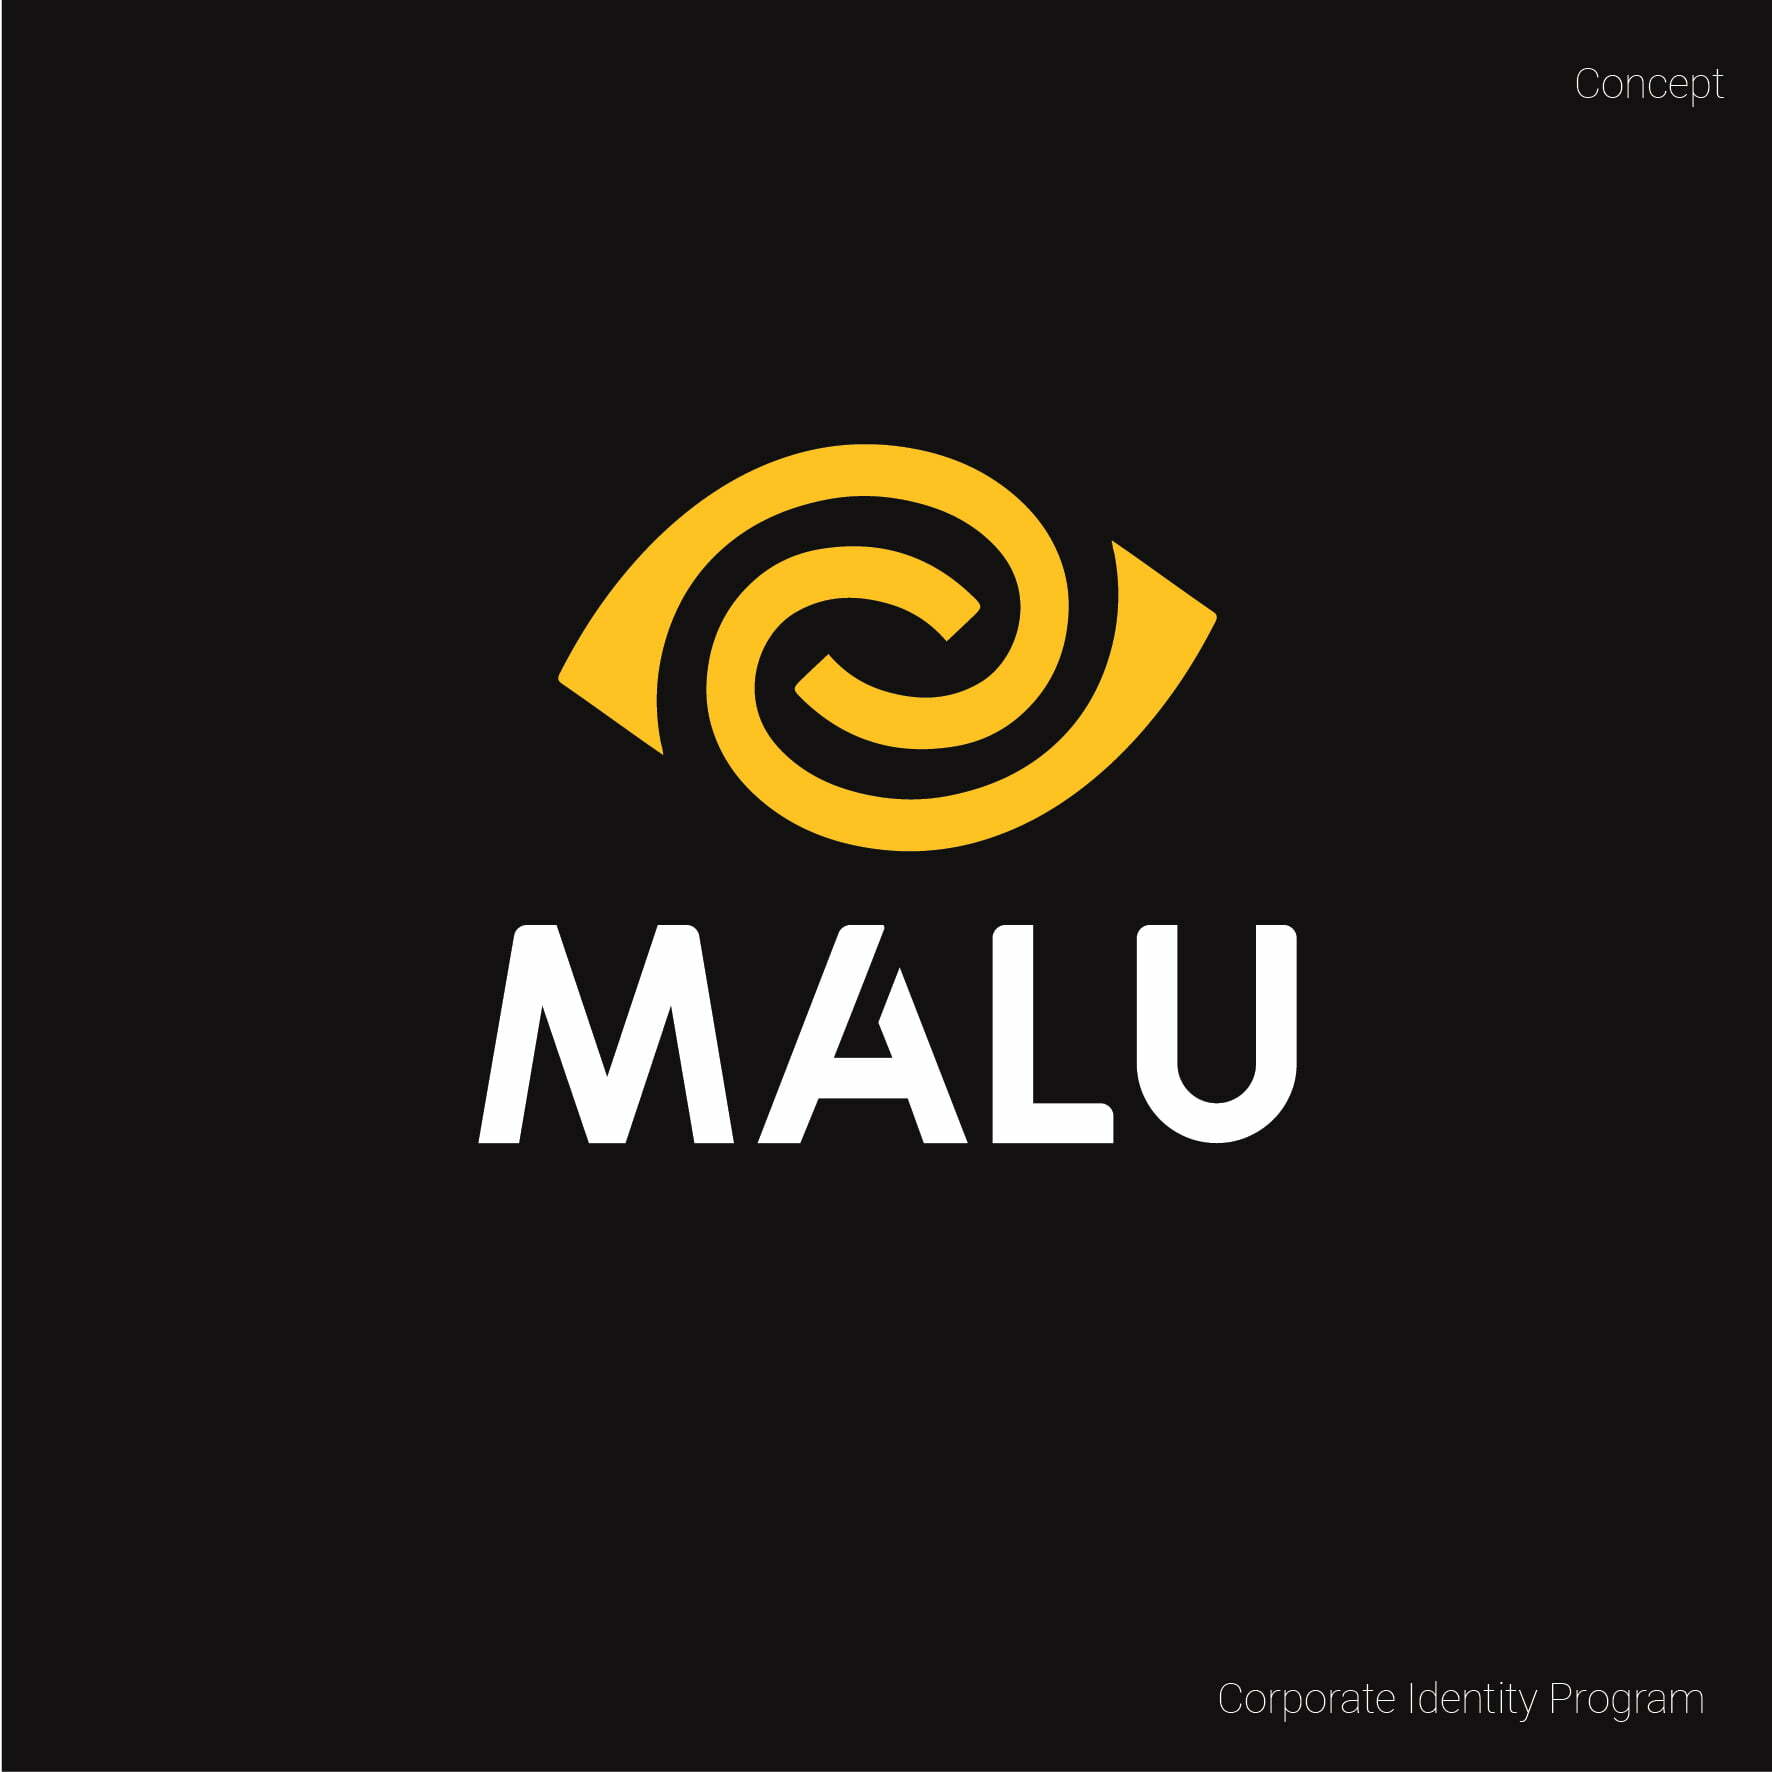 Malu Concept 02